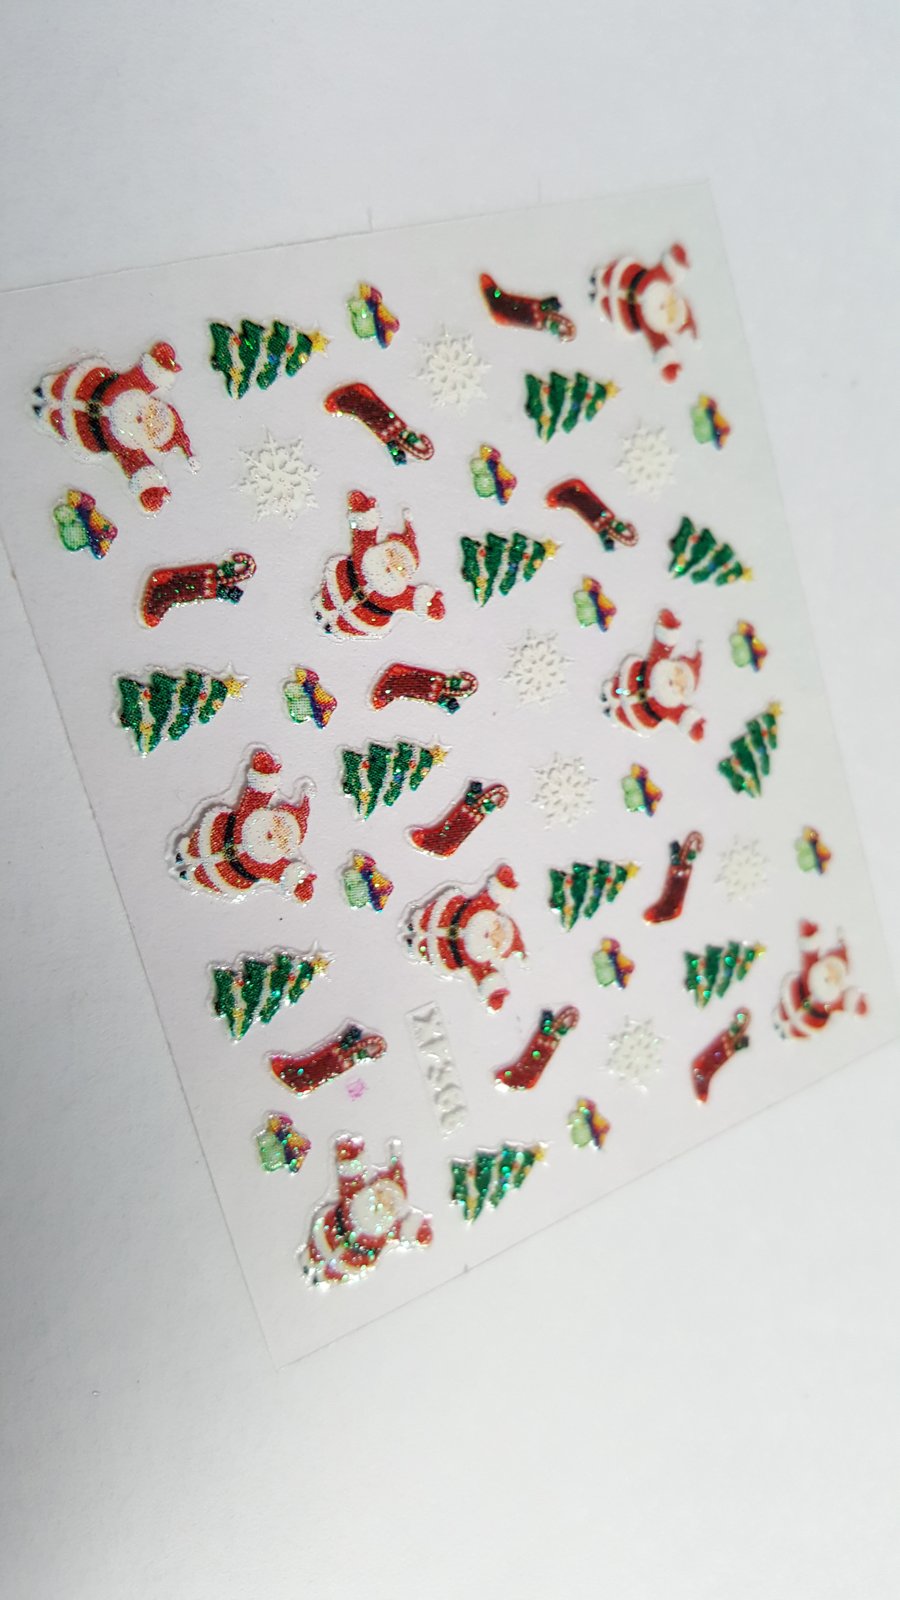 1 x Nail Art Sticker Sheet - 63mm x 52mm - 1